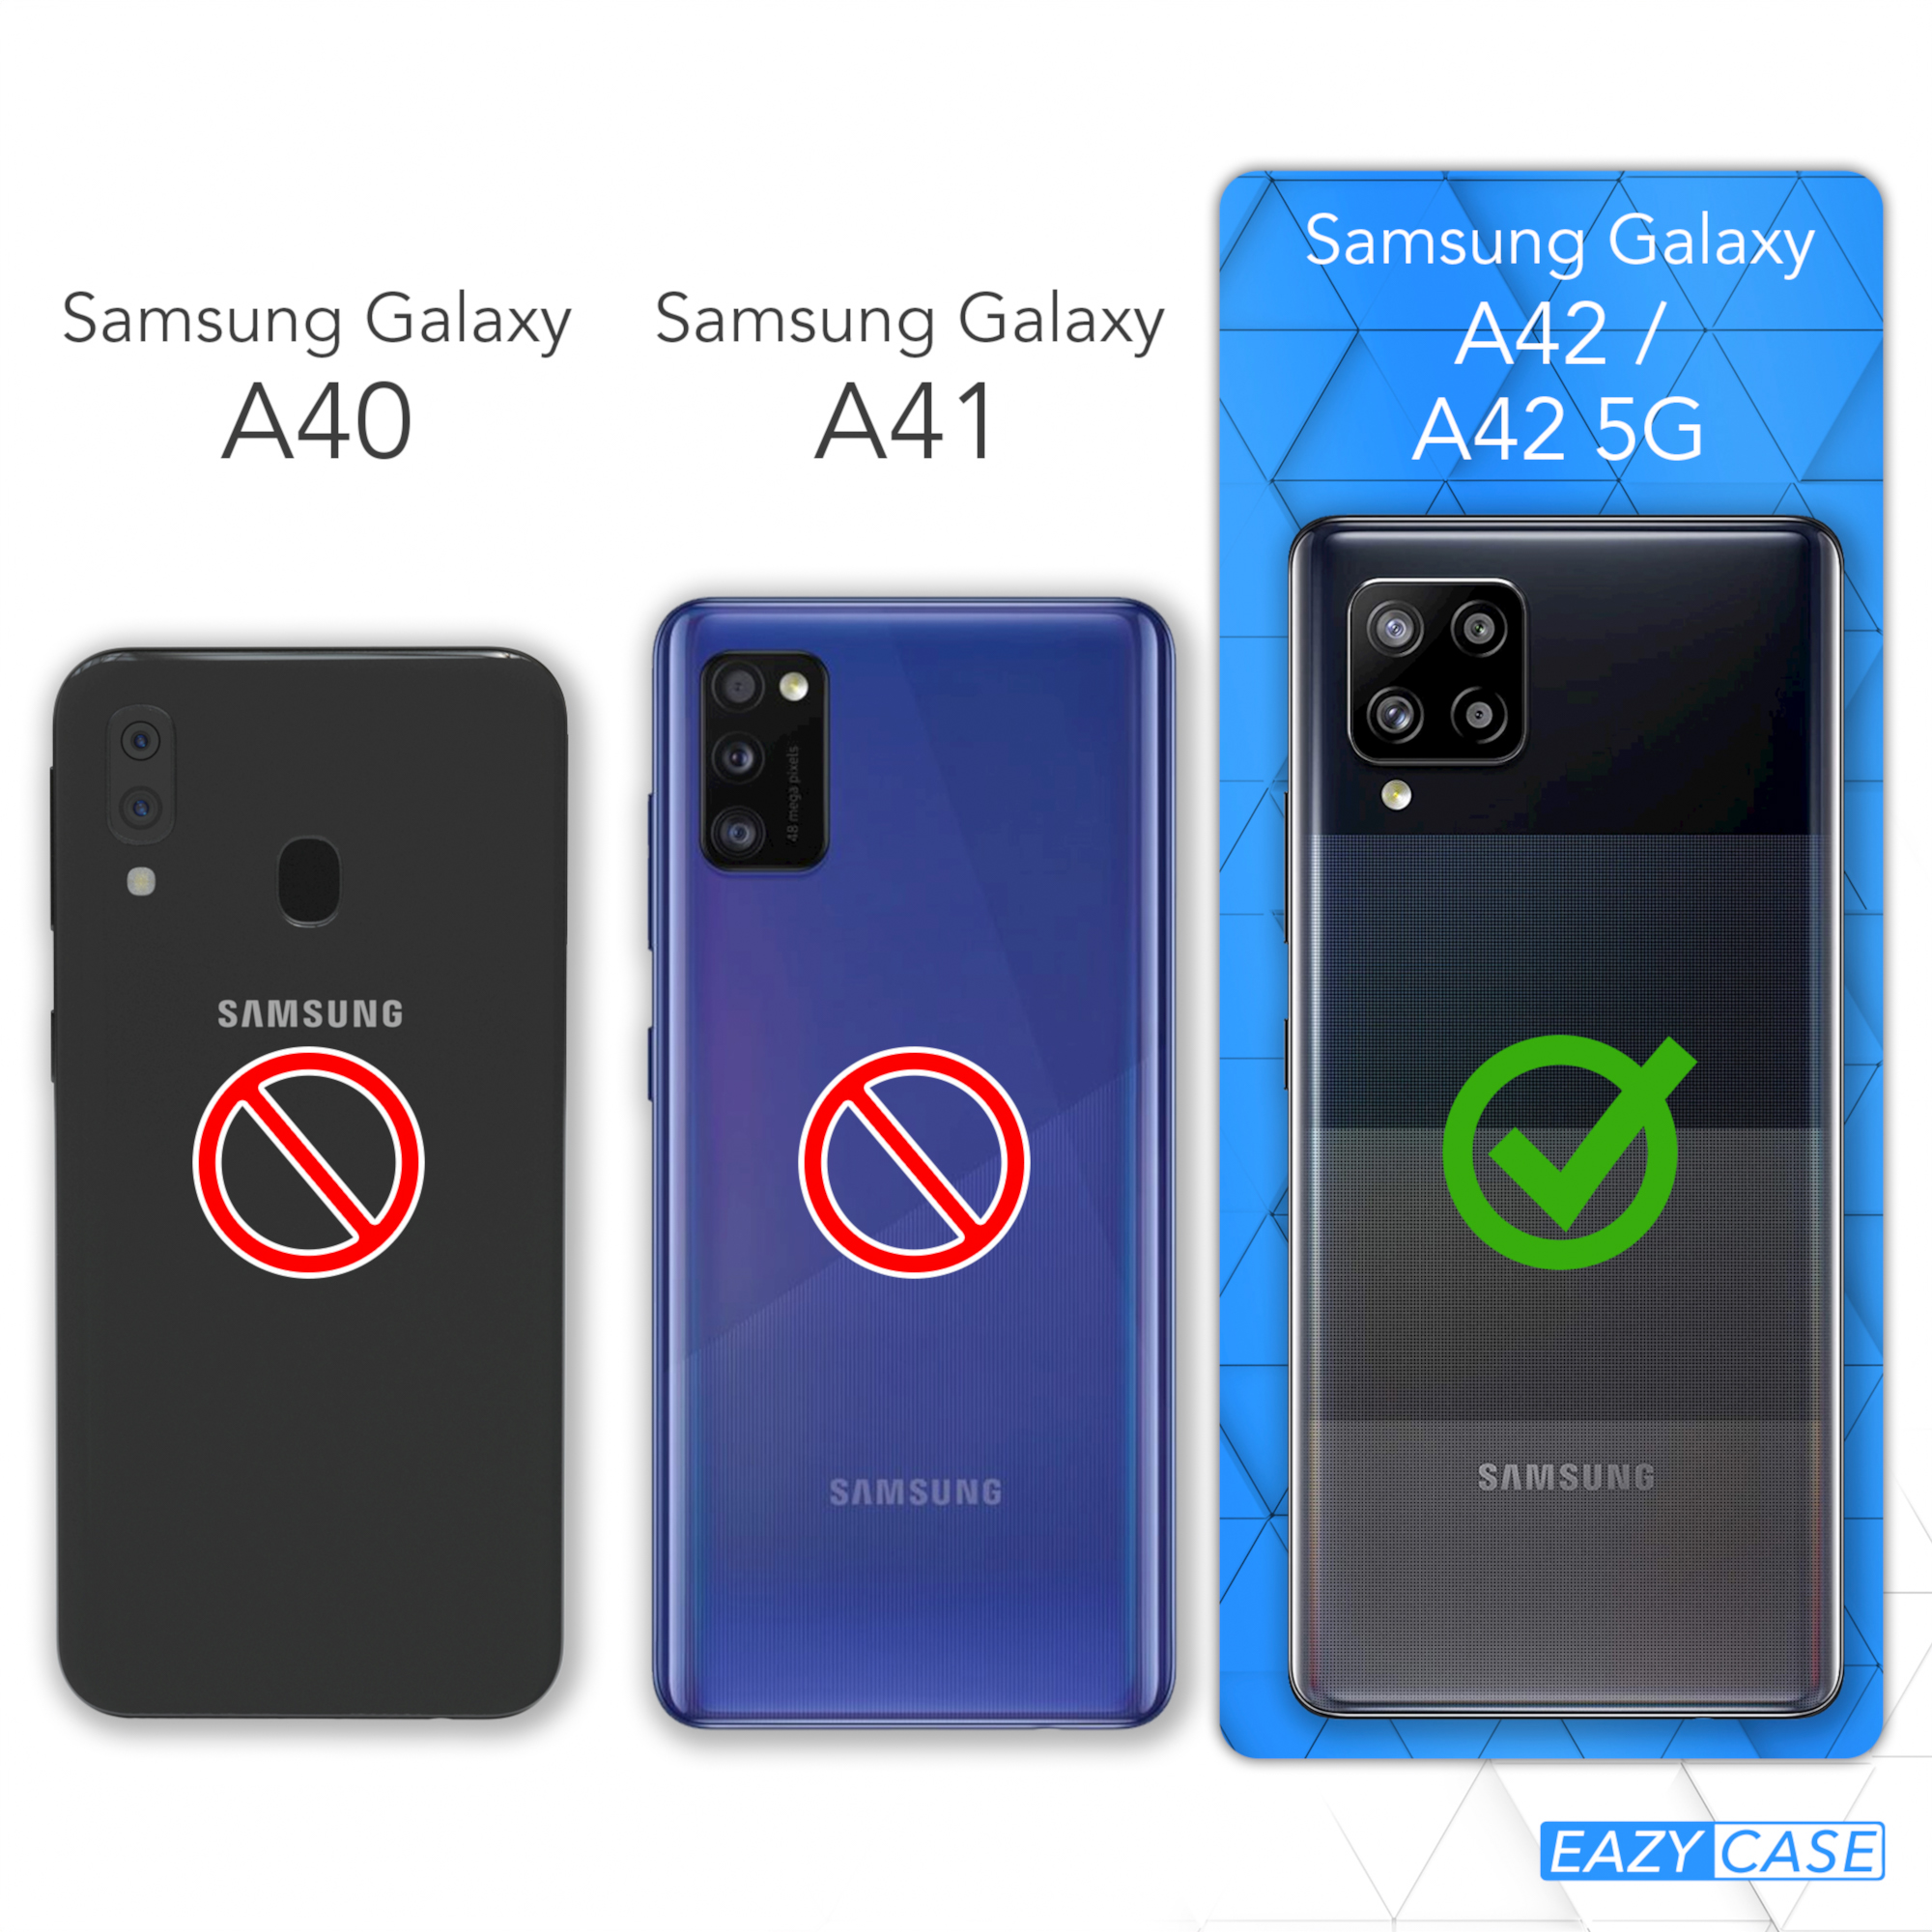 CASE EAZY Umhängetasche, Coral / Altrosa unifarbend, A42 Galaxy Transparente mit Kette Samsung, runder 5G, Handyhülle